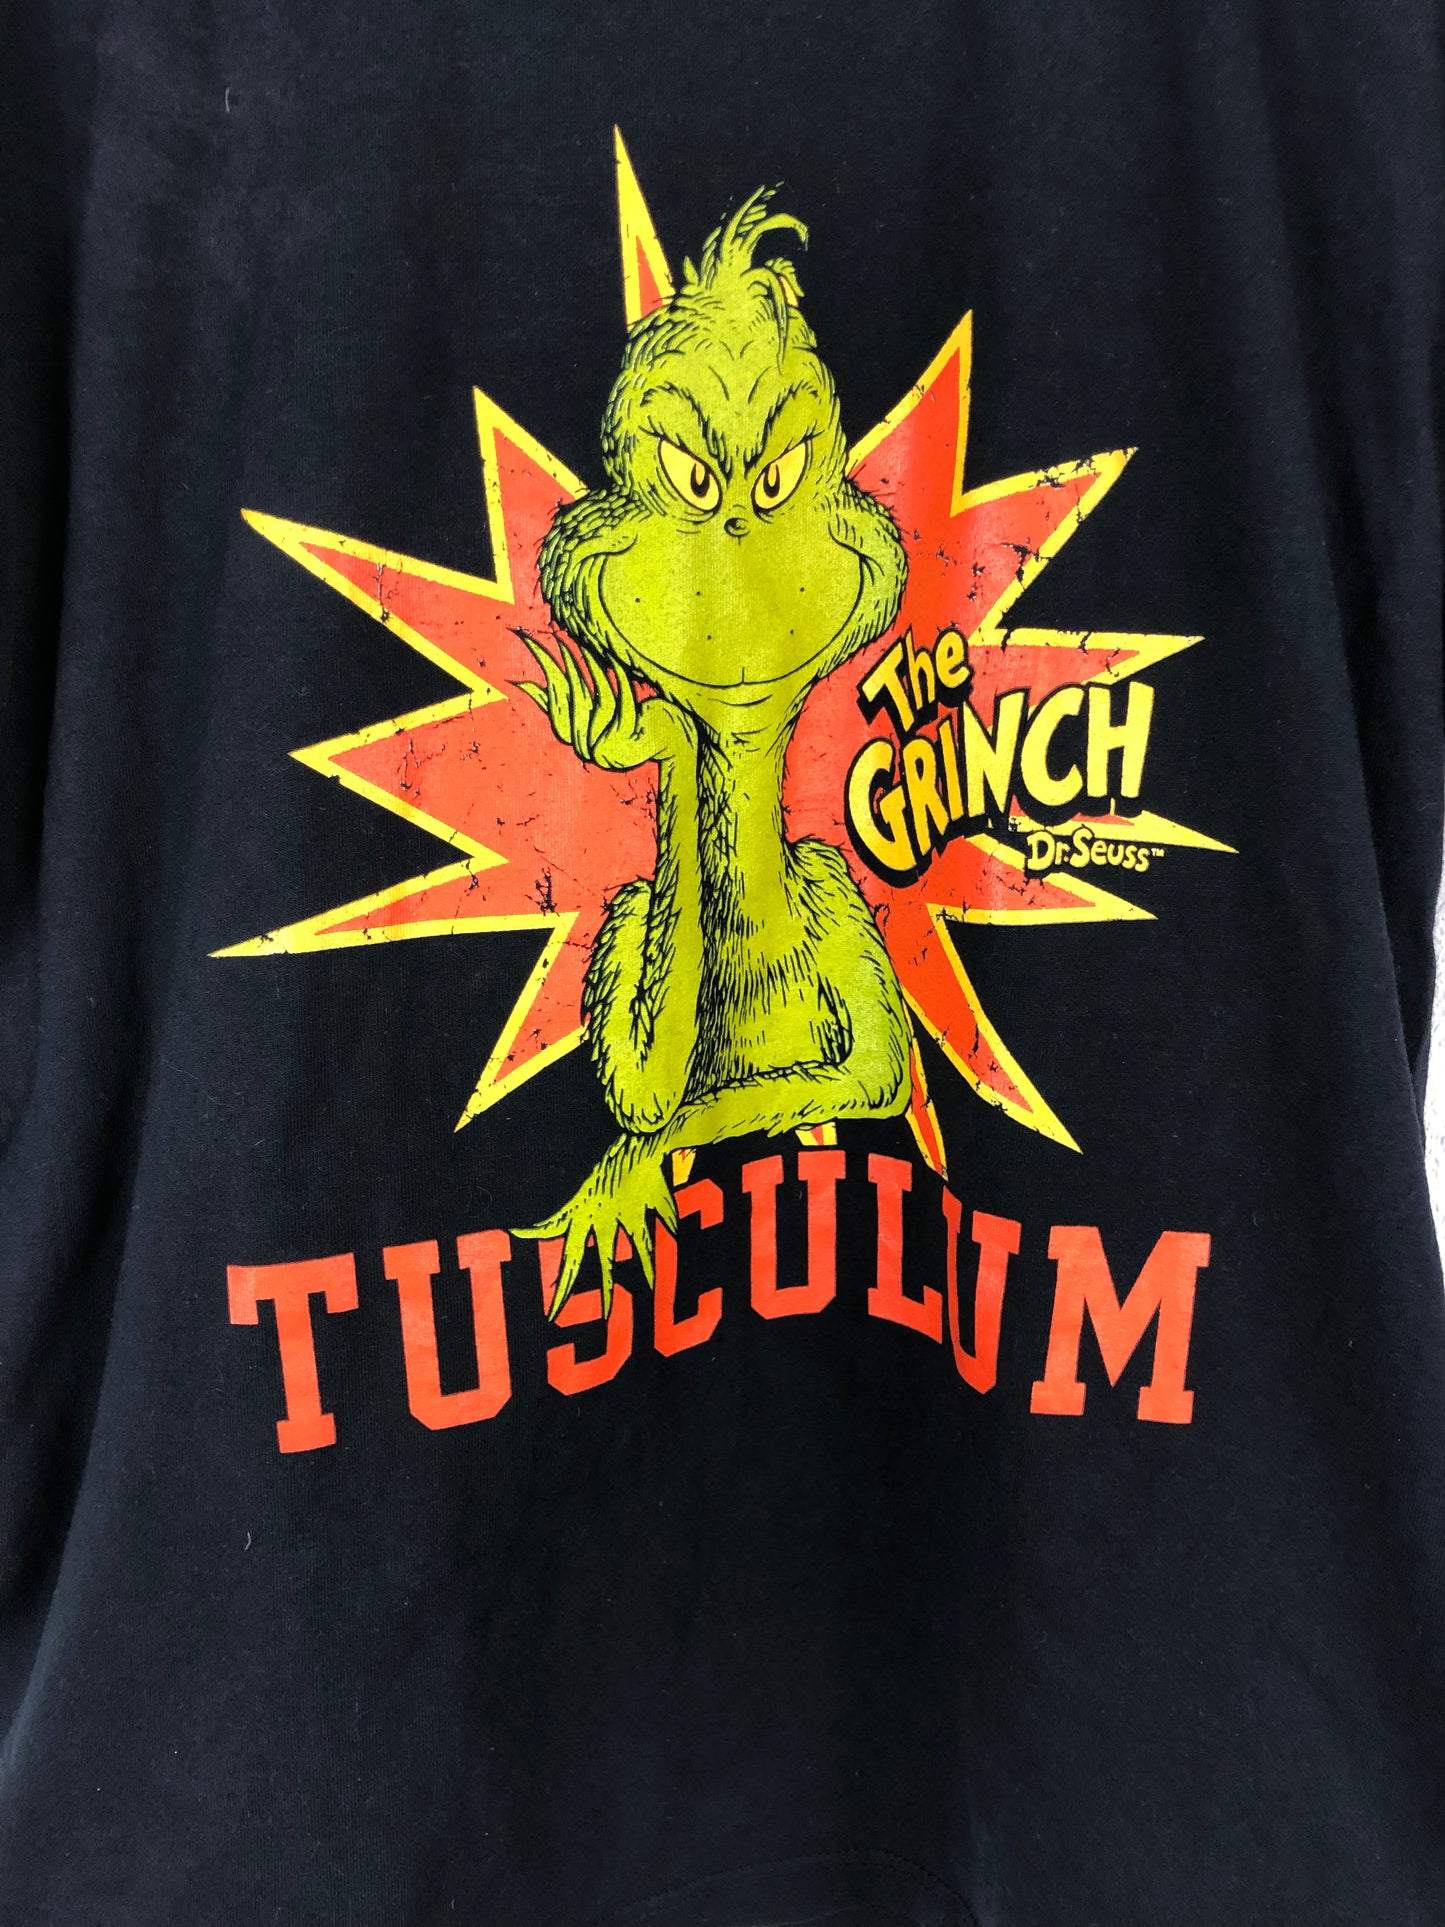 VTG Dr. Seuss The Grinch Tusculum Tee Sz M